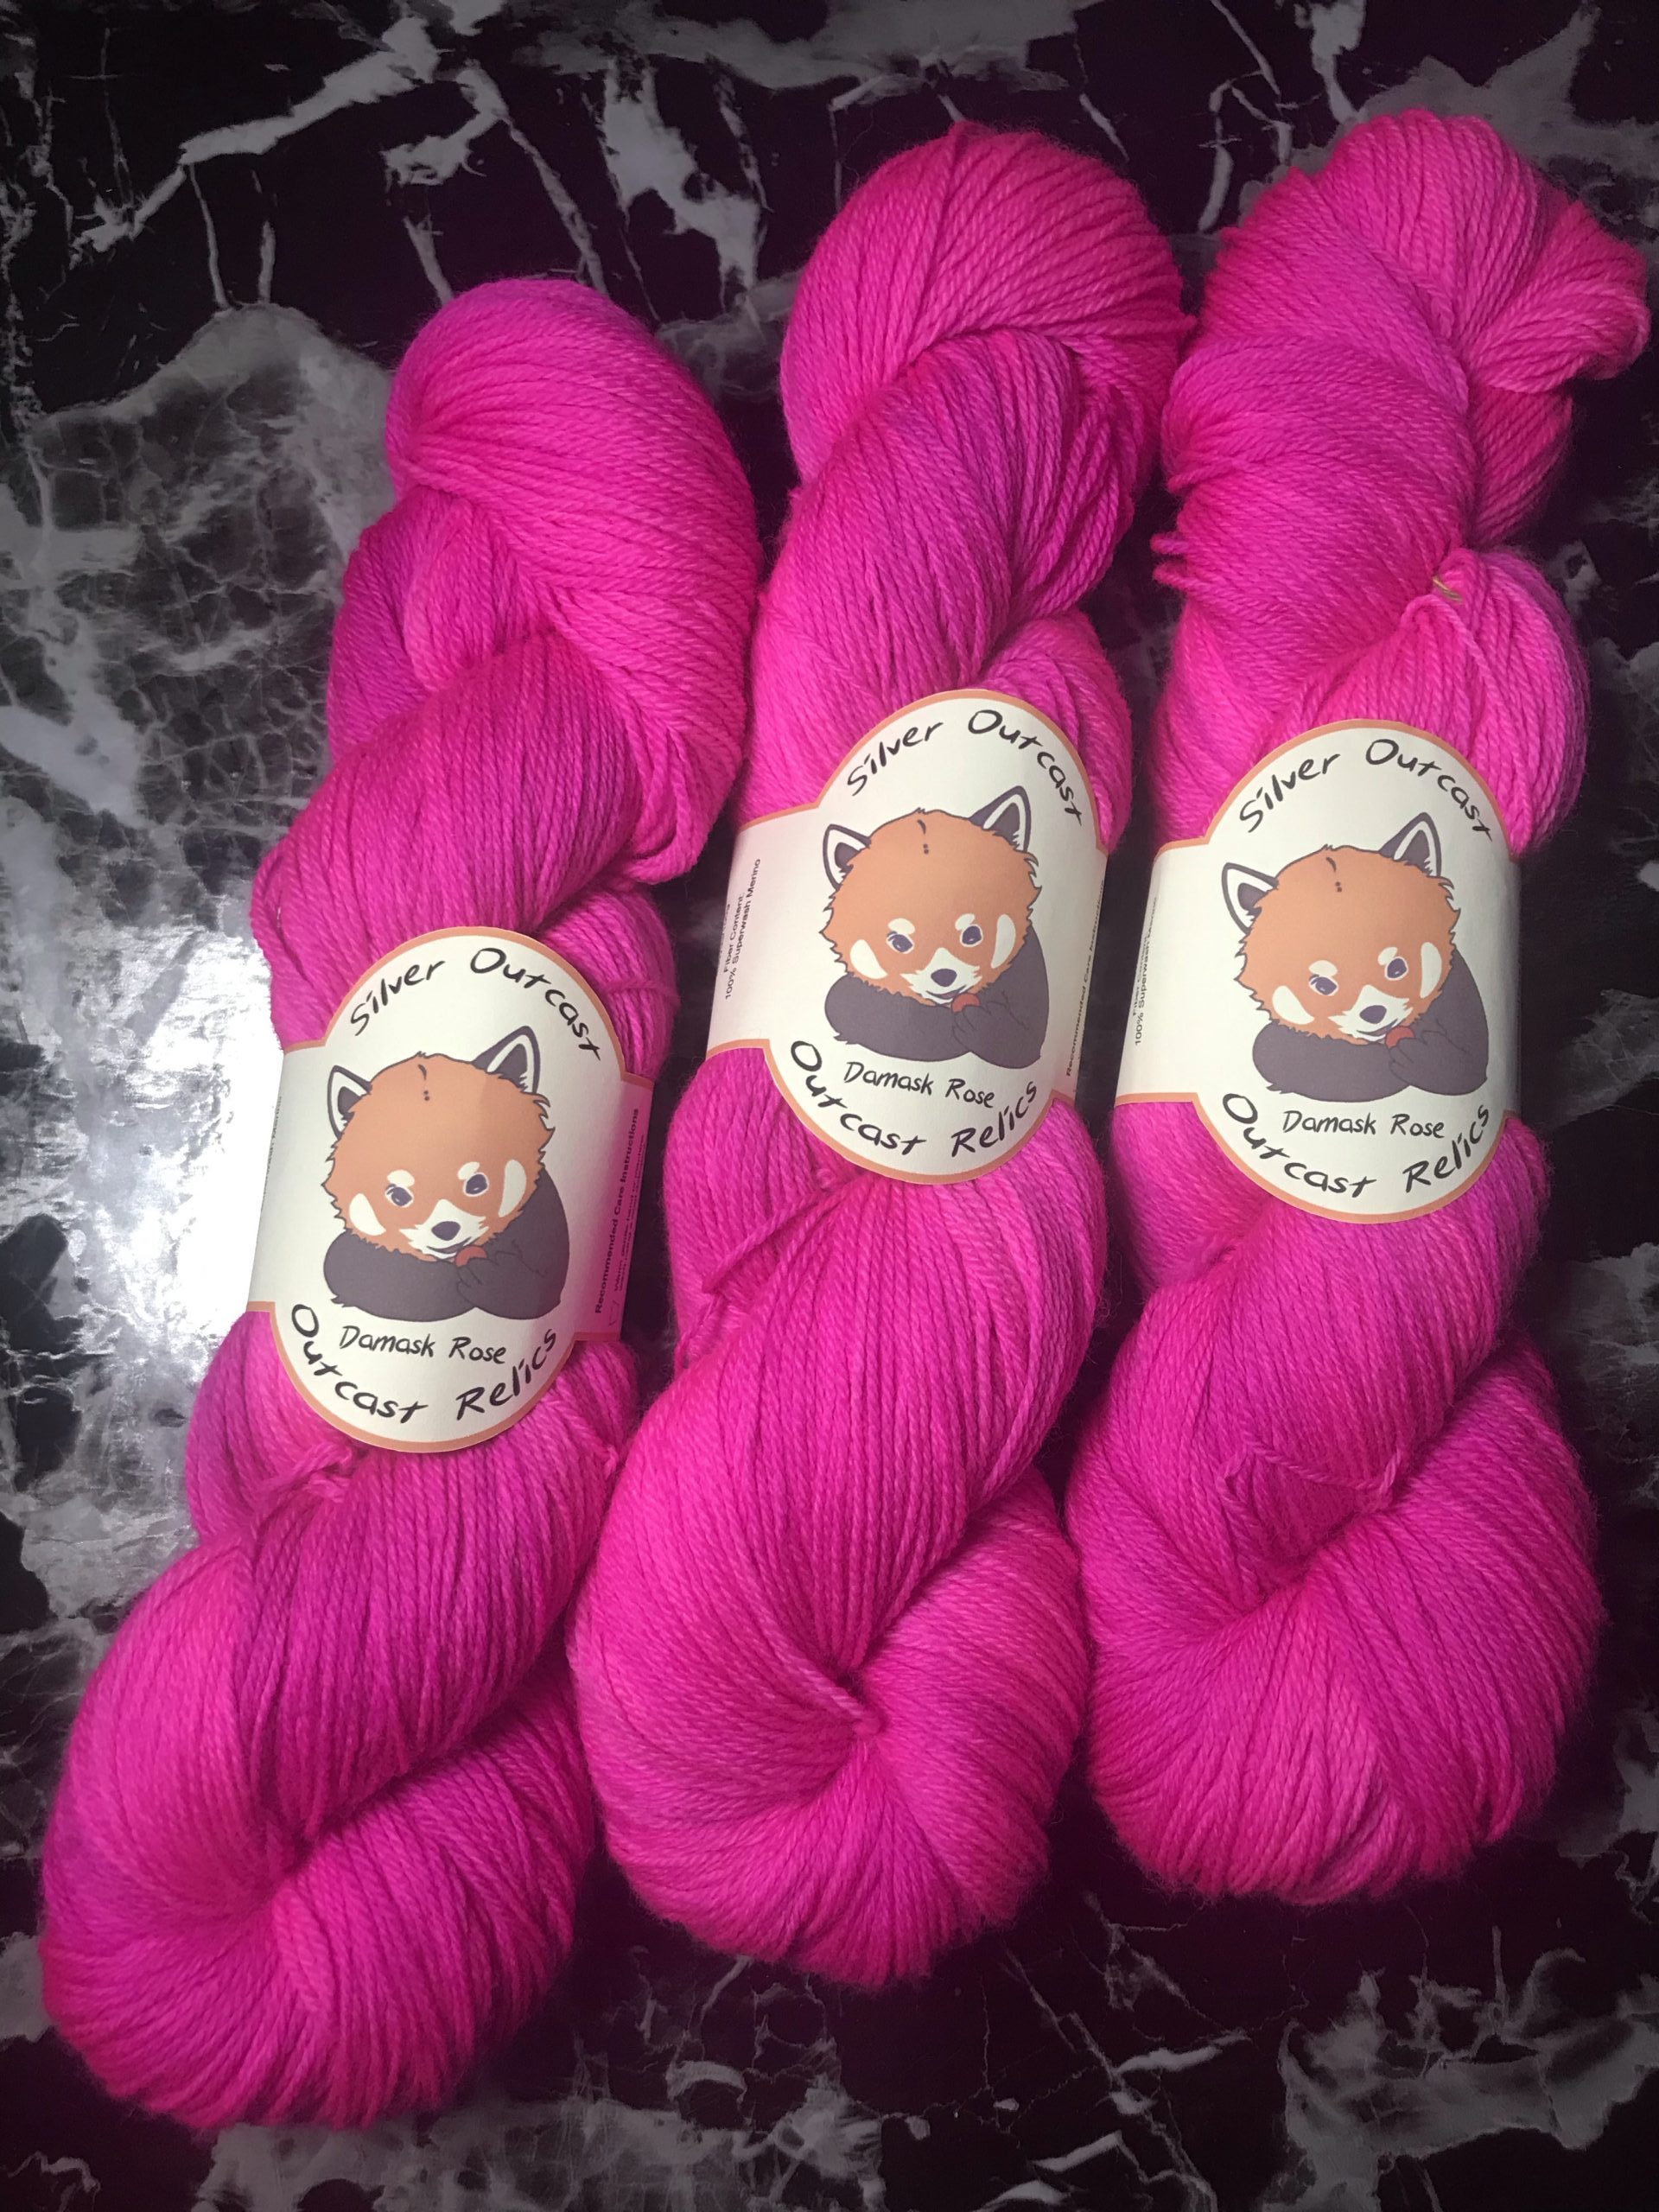 Baby Pink Shepherd's Wool Worsted Weight Yarn